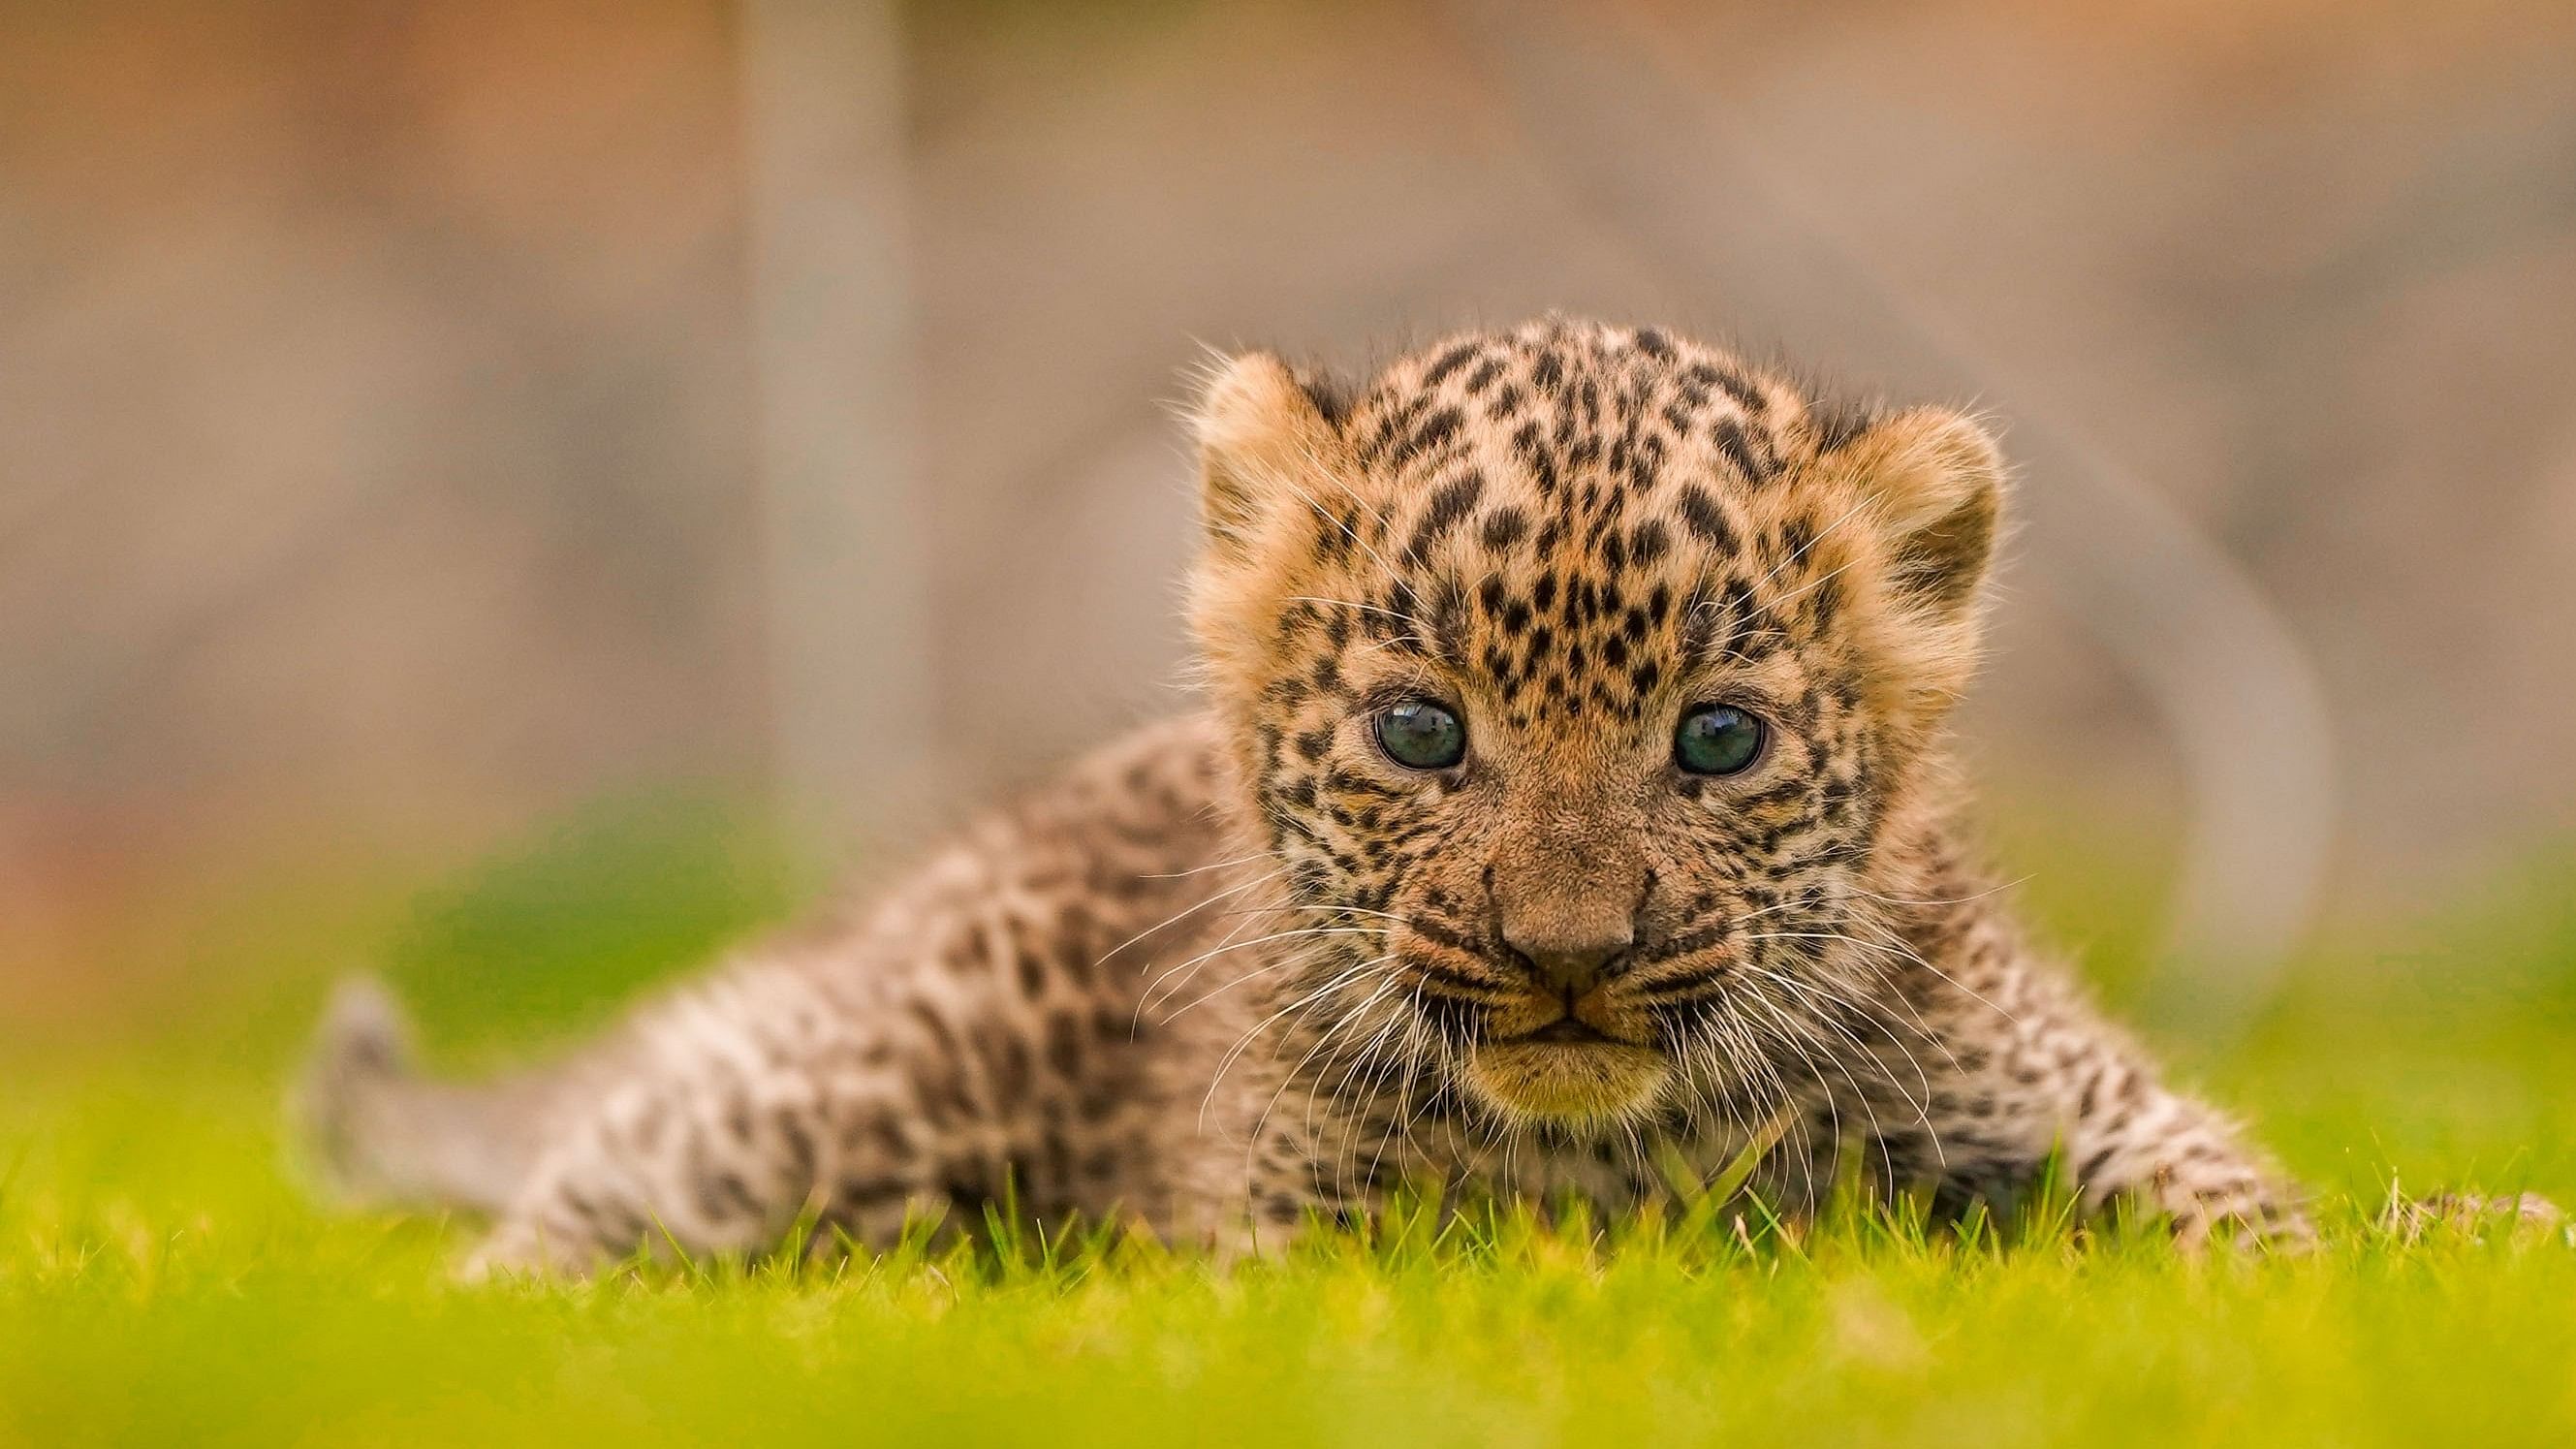 <div class="paragraphs"><p>Representative image of a leopard cub.&nbsp;</p></div>